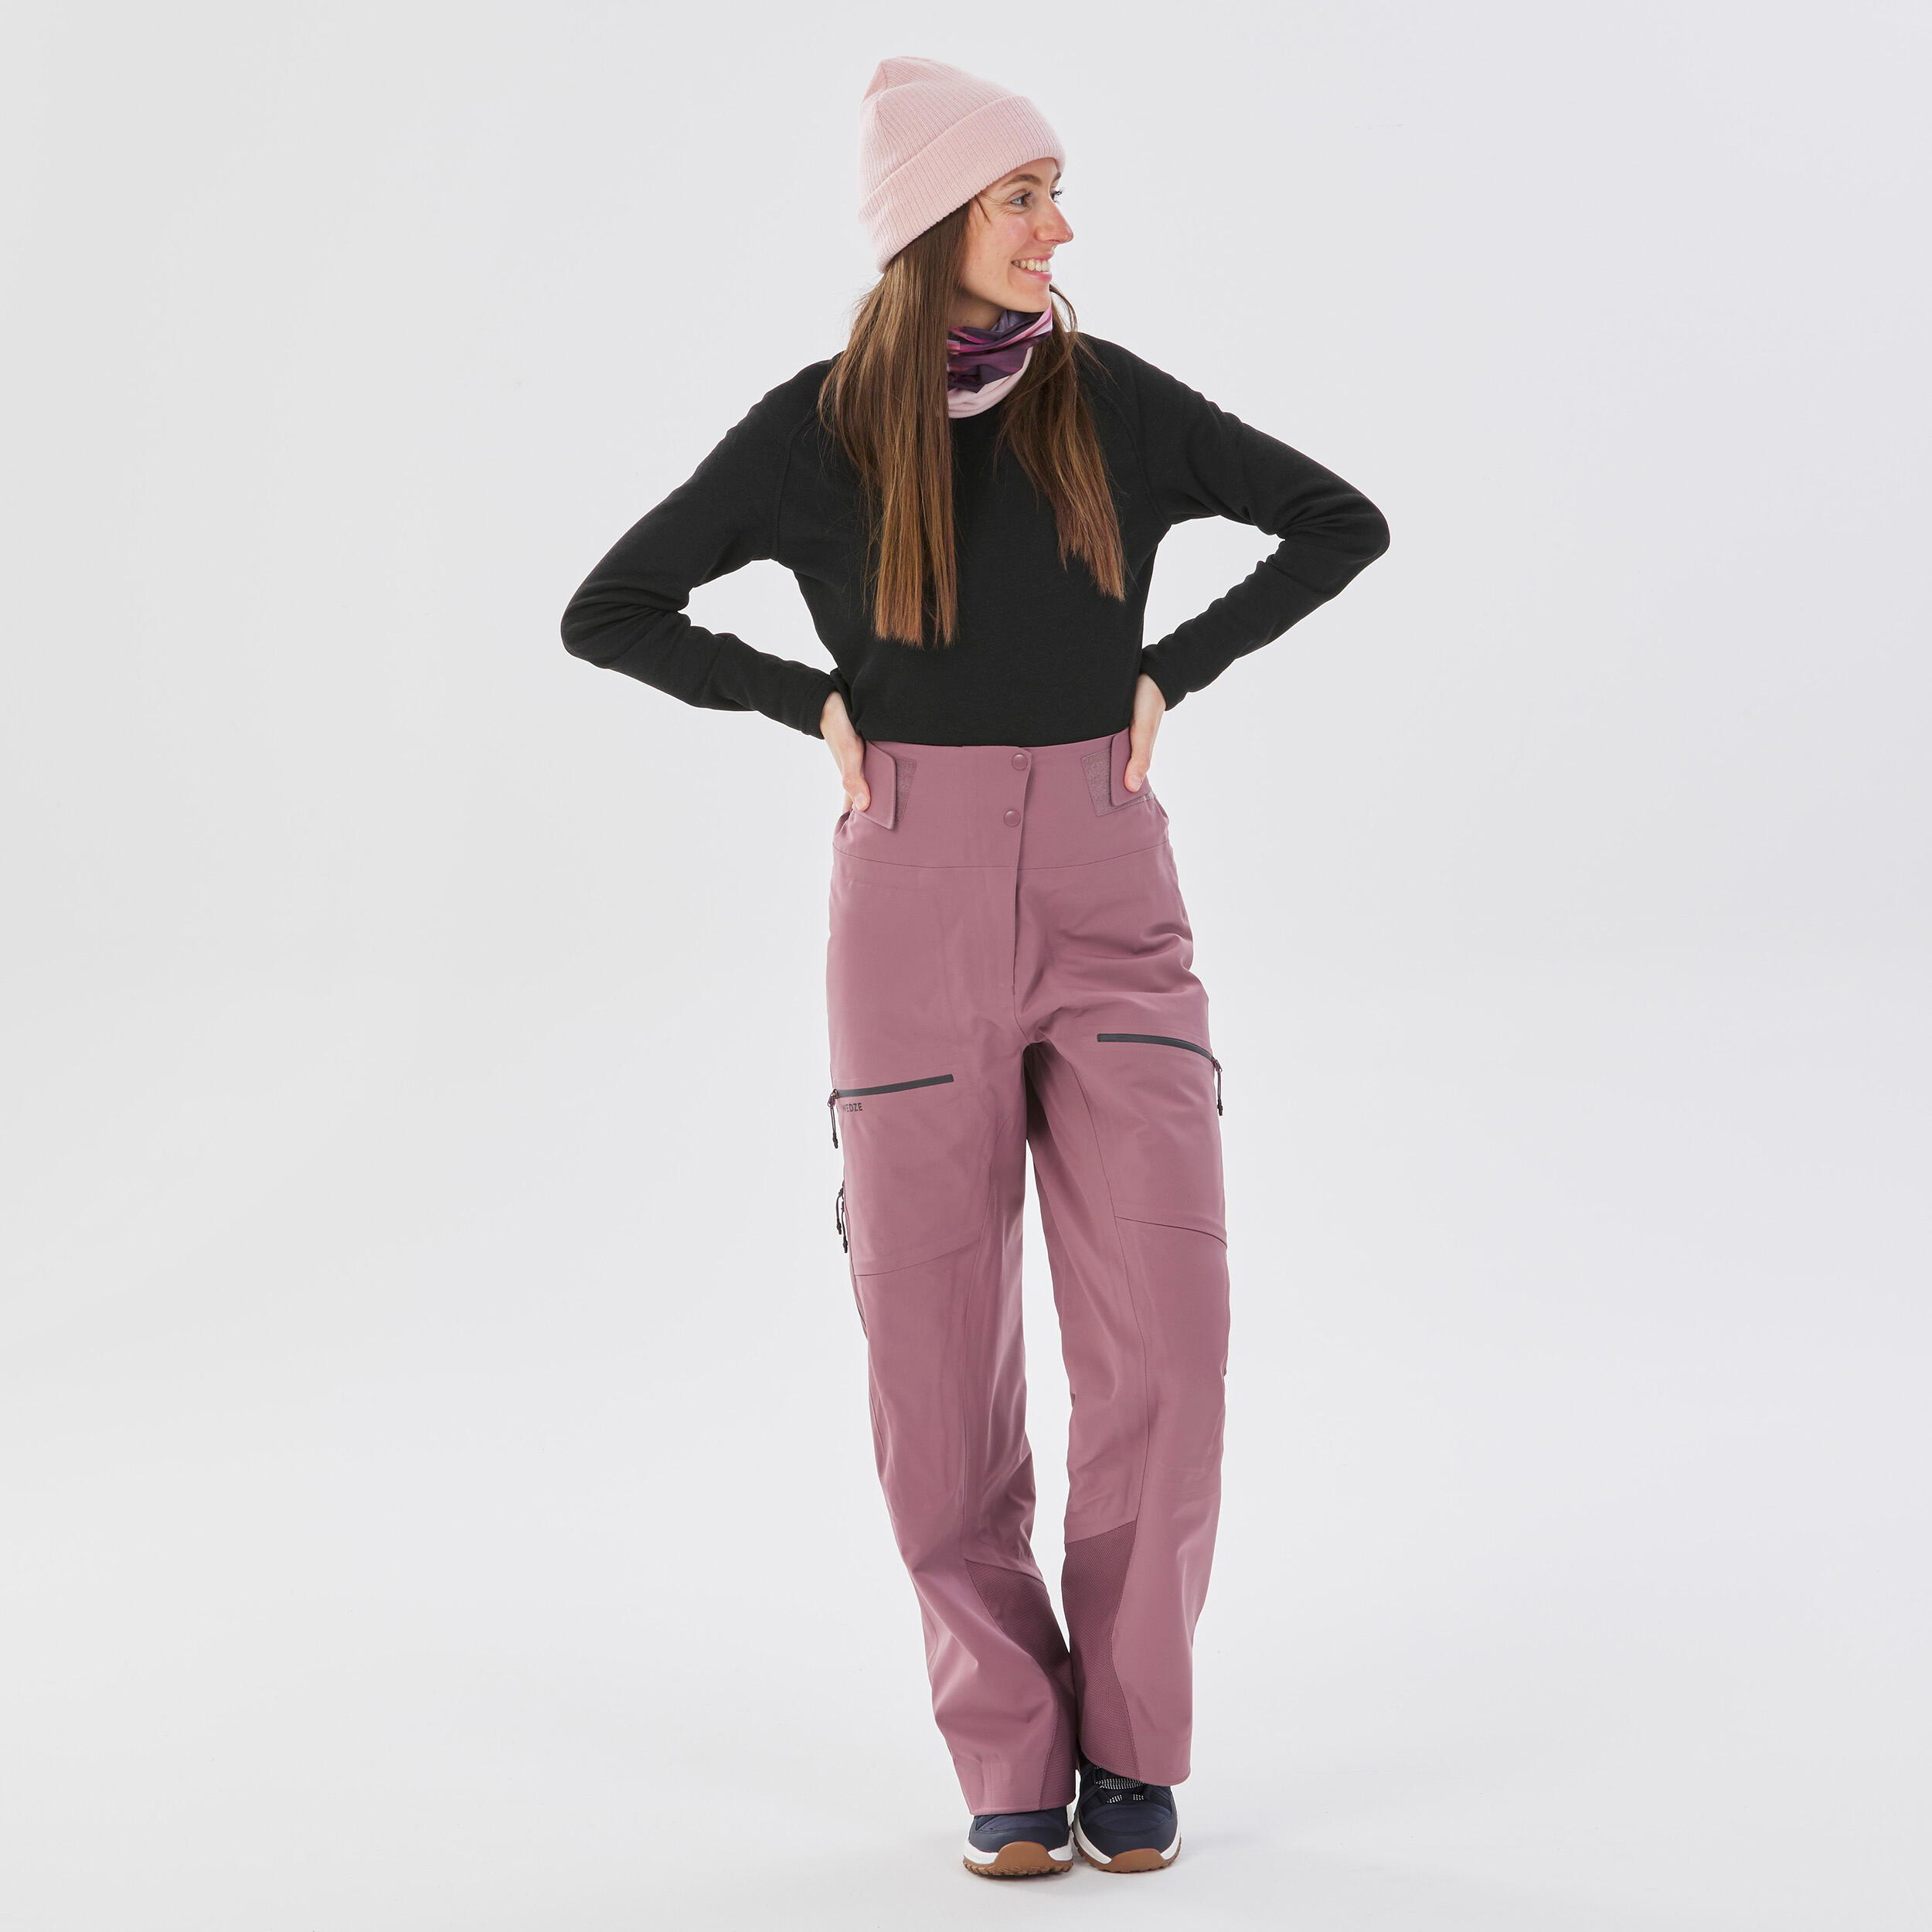 Pantalon de ski femme – FR 500 rose - WEDZE